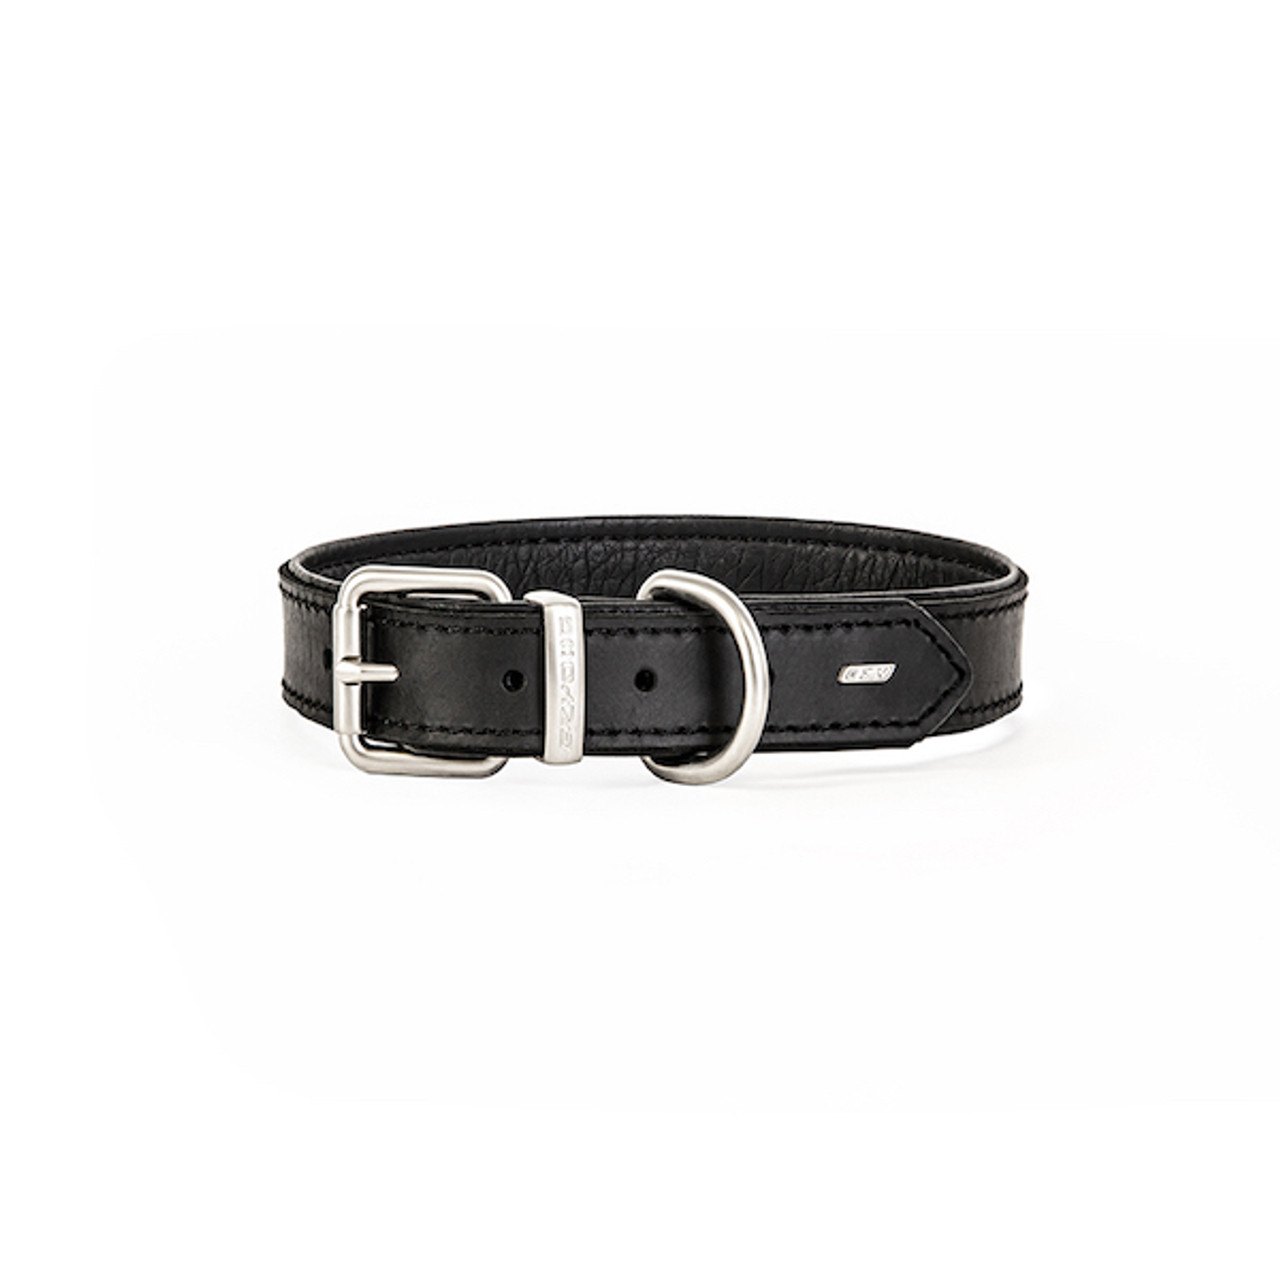 Leather Dog Collars | Custom Leather Dog Collars